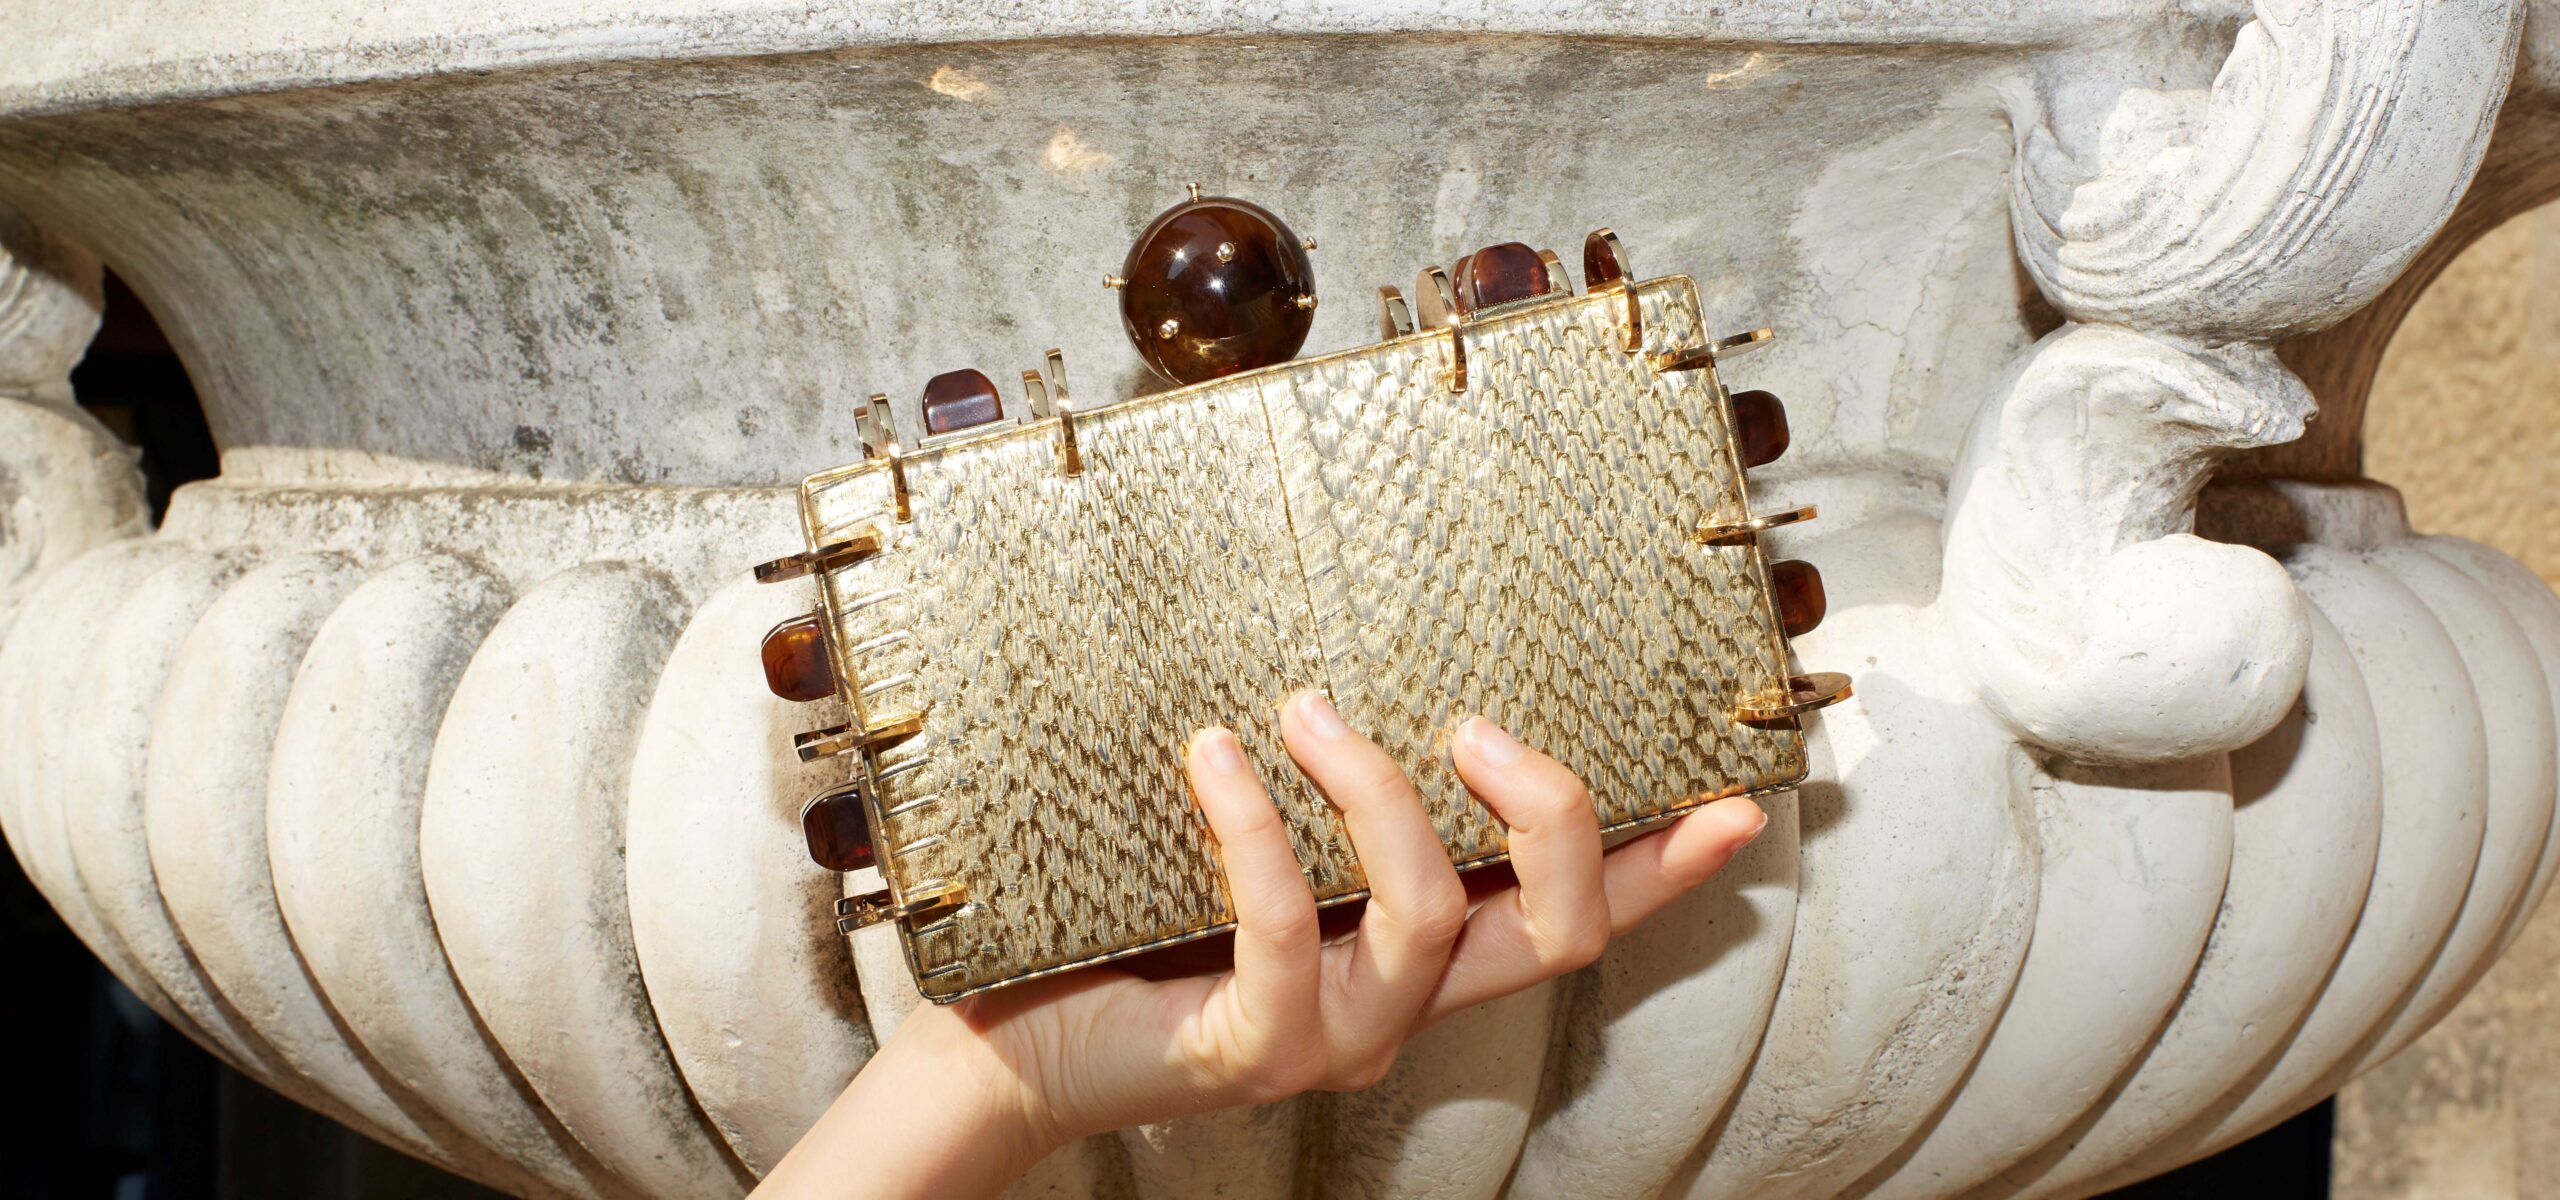 Hand holding a snake skin designer handbag in neutral tones.